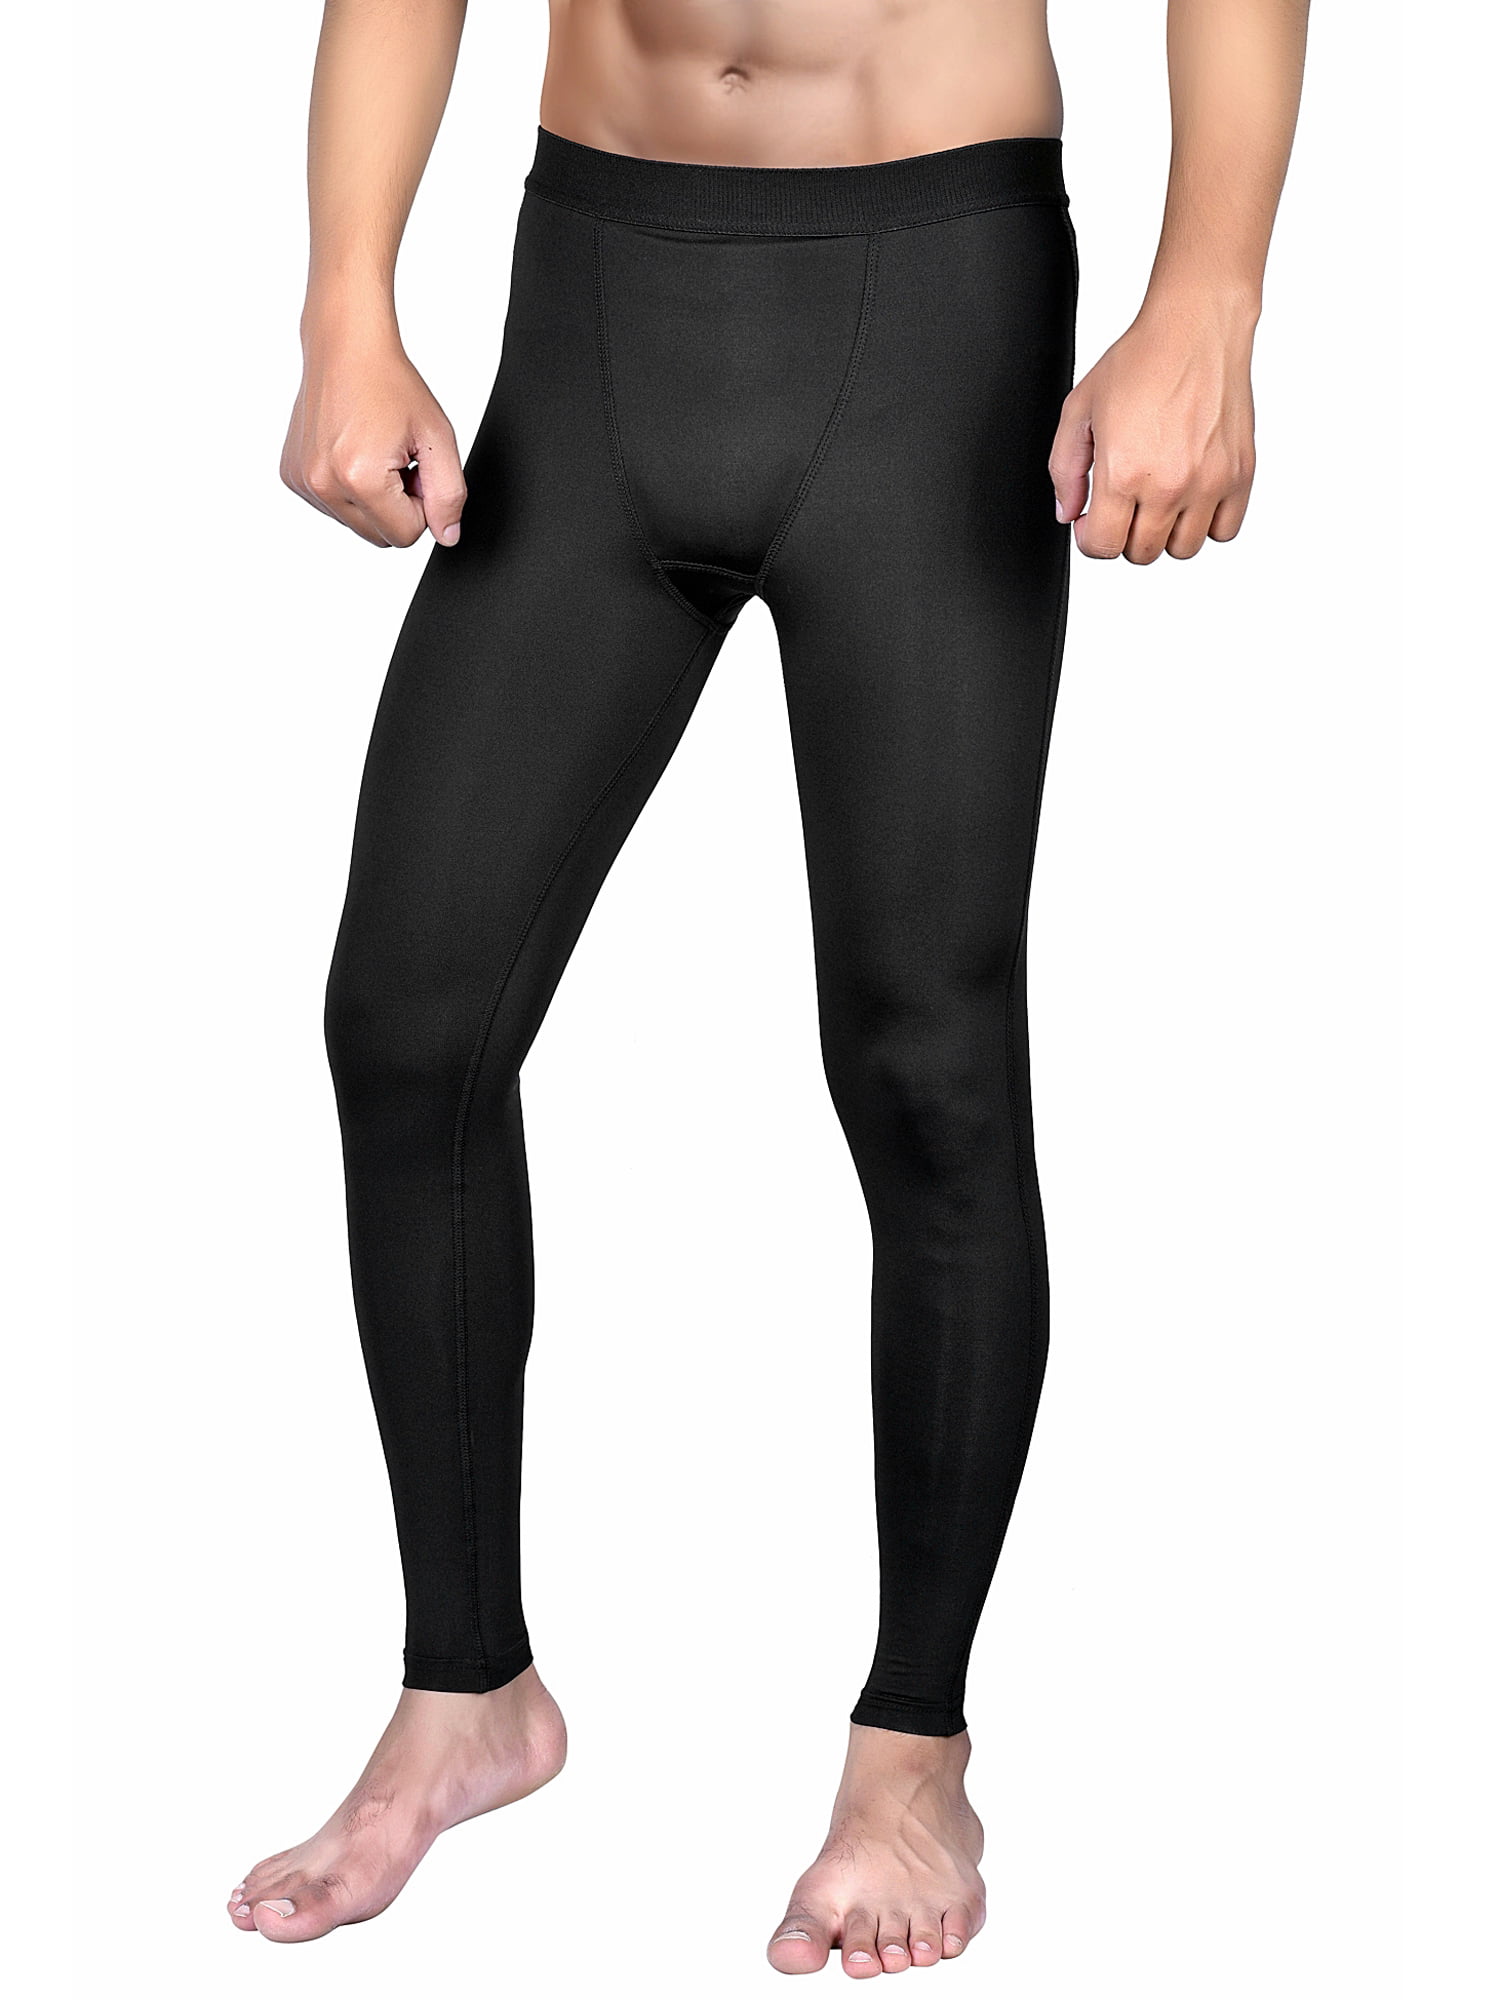 Sub Sports Elite RX Mens Graduated Compression Base Layer Tights/Pants